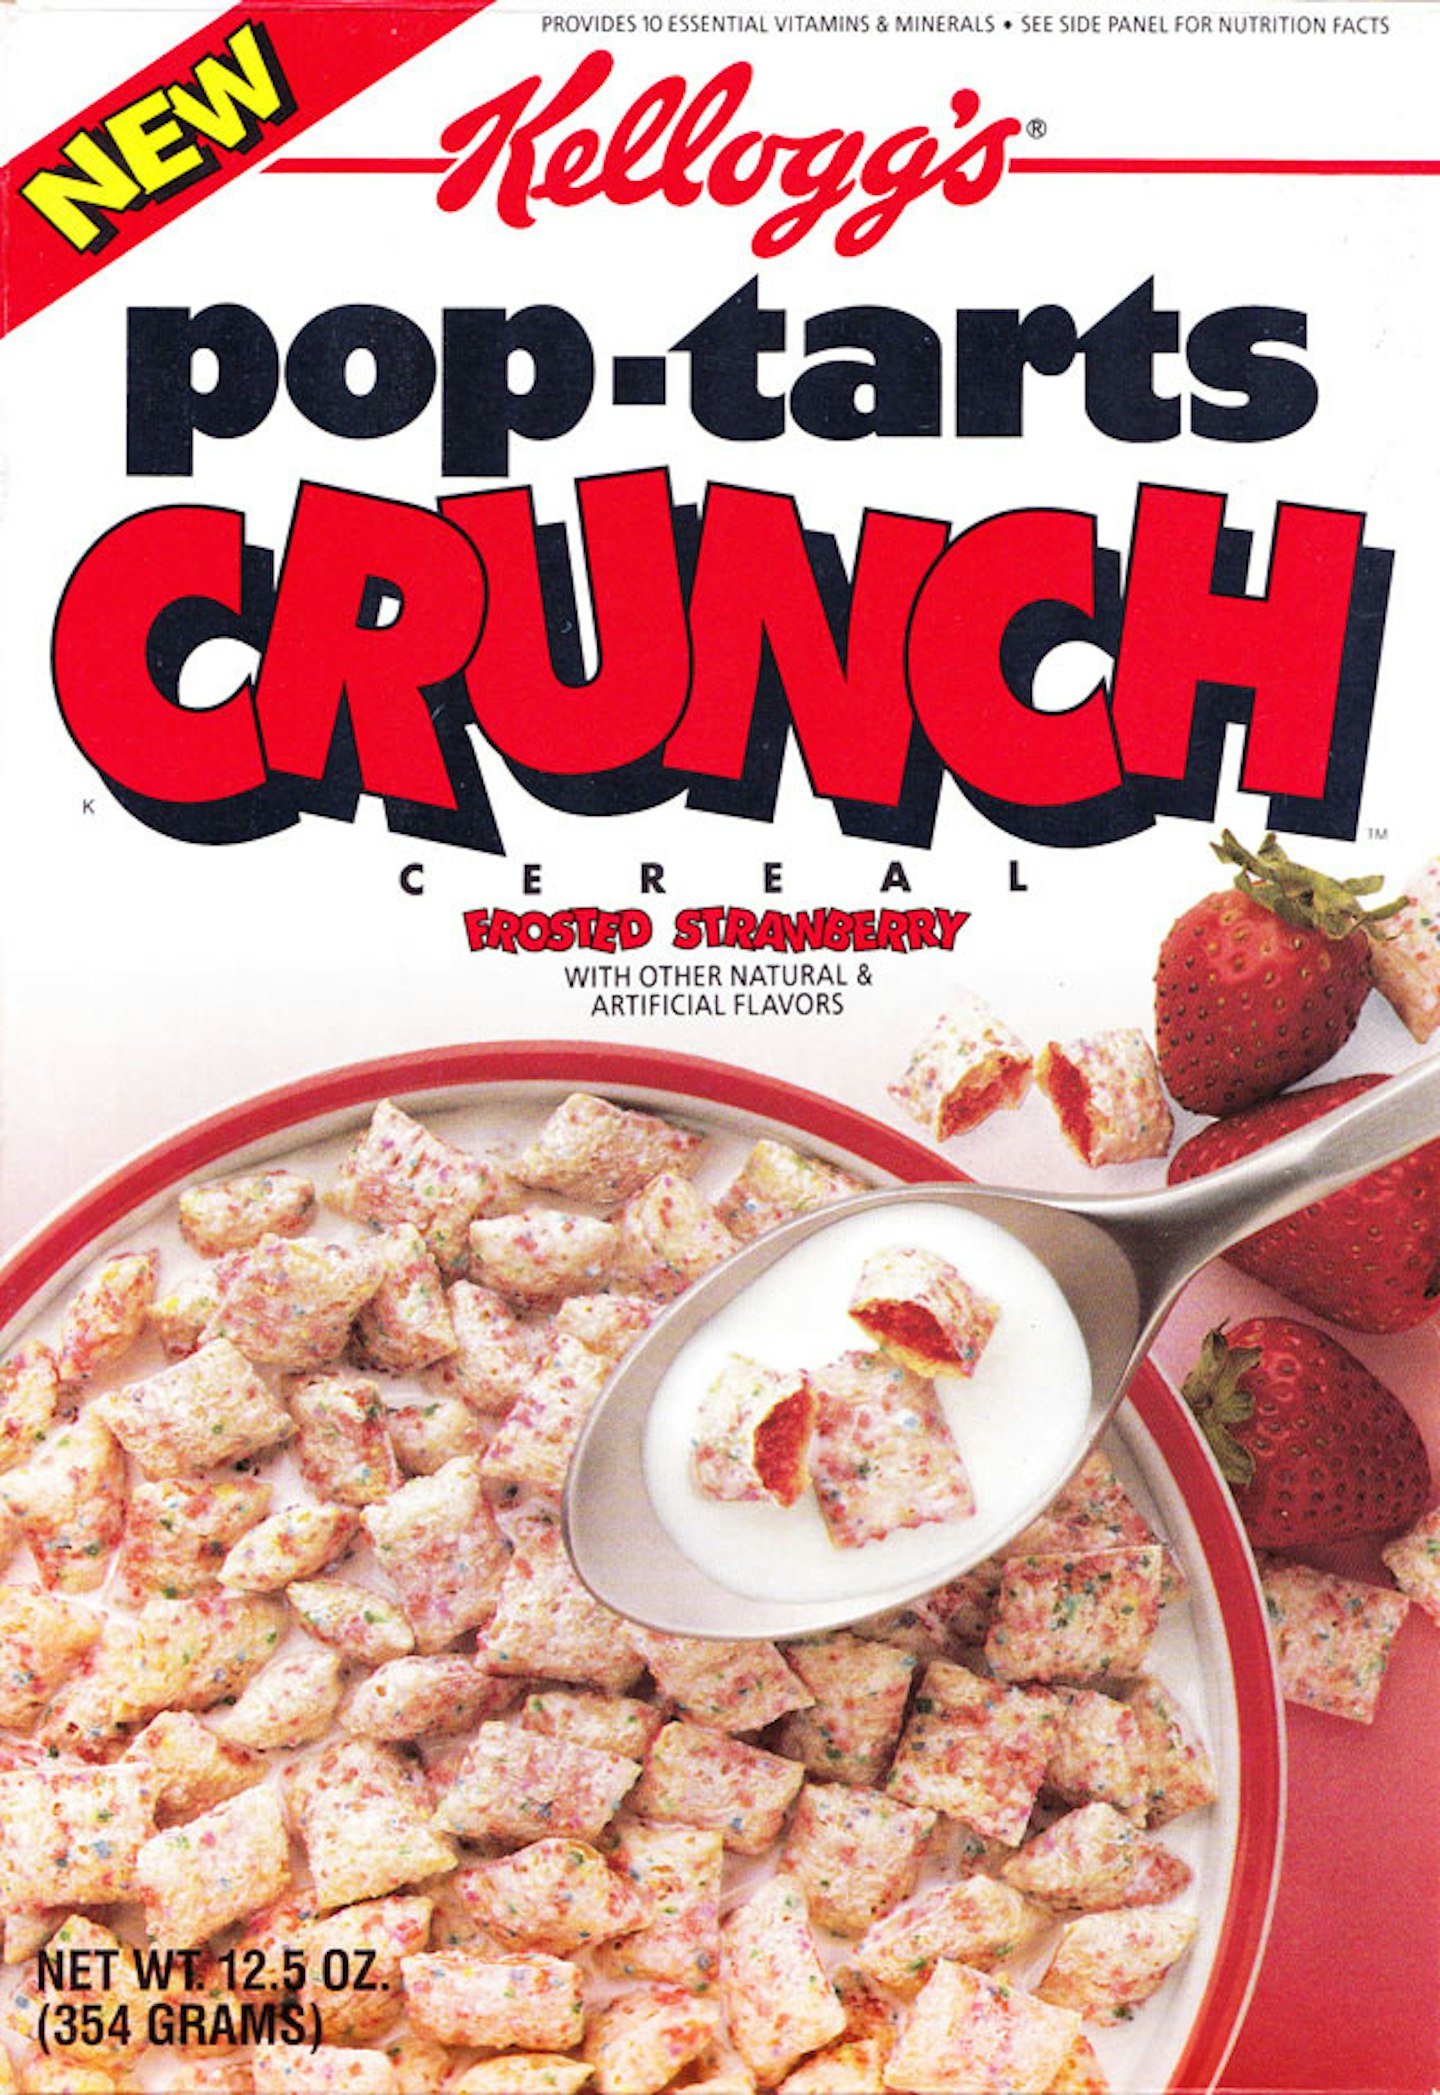 Discontinued cereals Pop Tarts Crunch